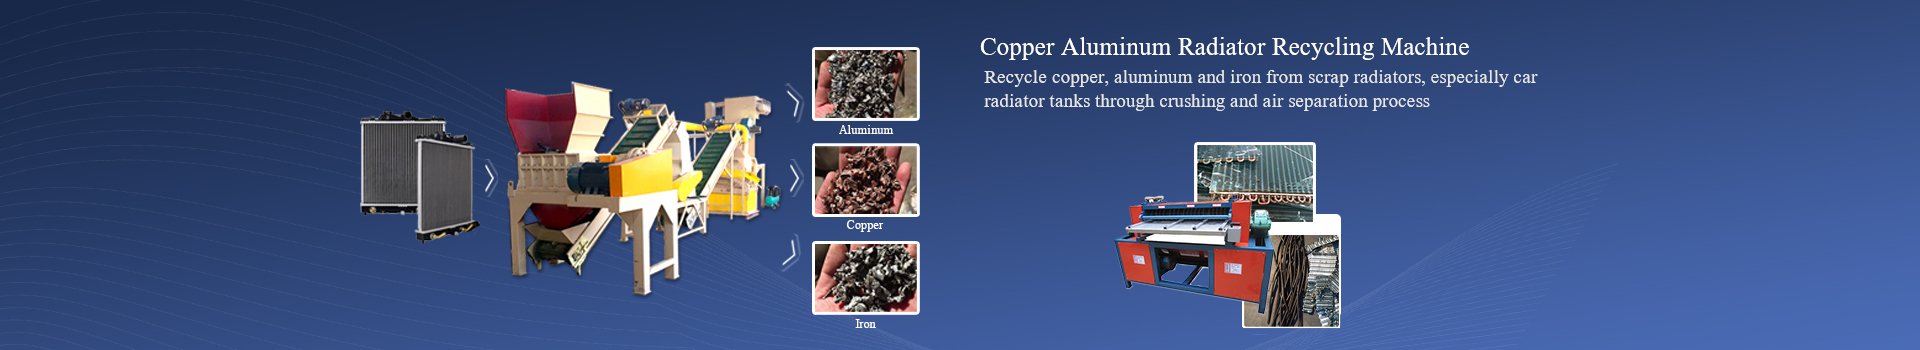 Copper Aluminum Radiator Recycling Machine